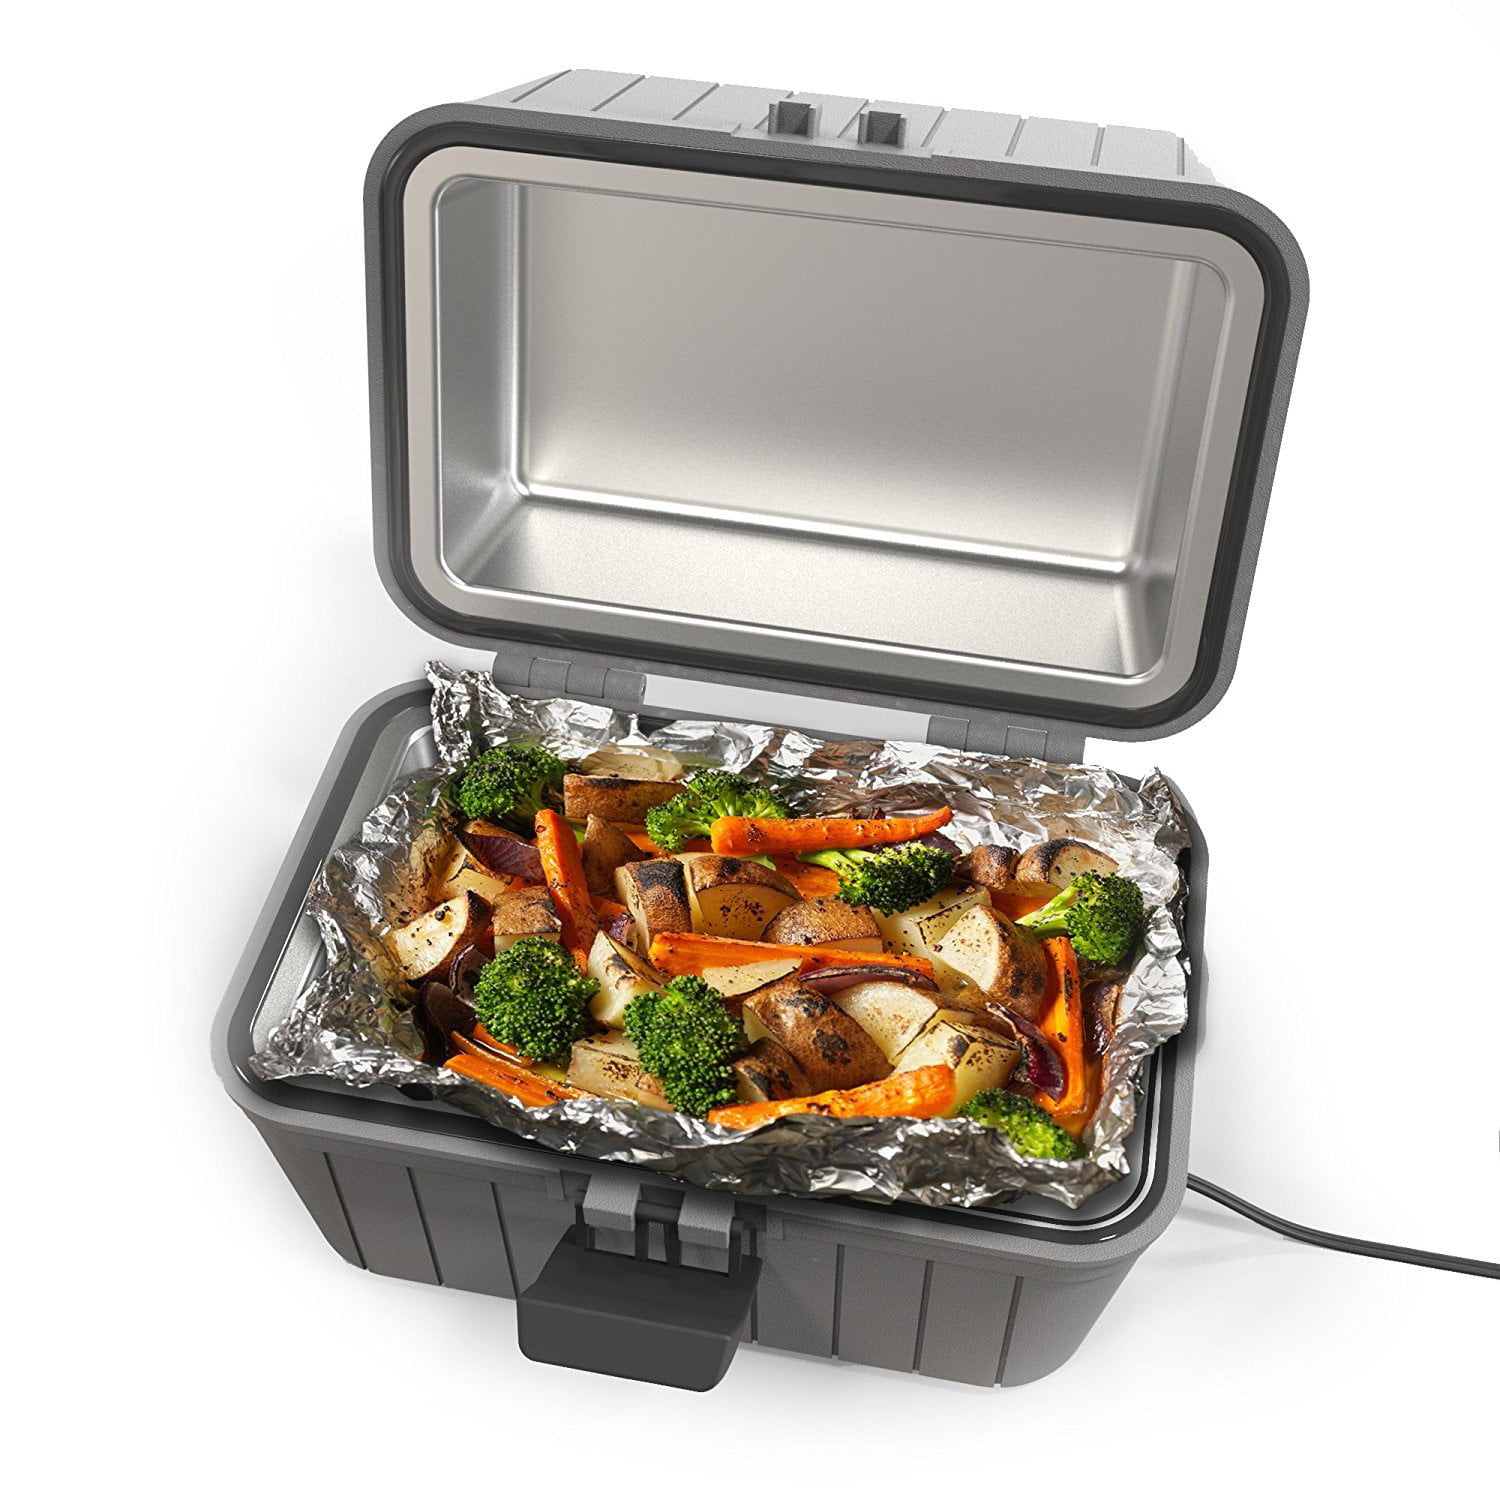 Kitcheniva Portable Electric Food Warmer Lunch Box 12V, 1 - Mariano's